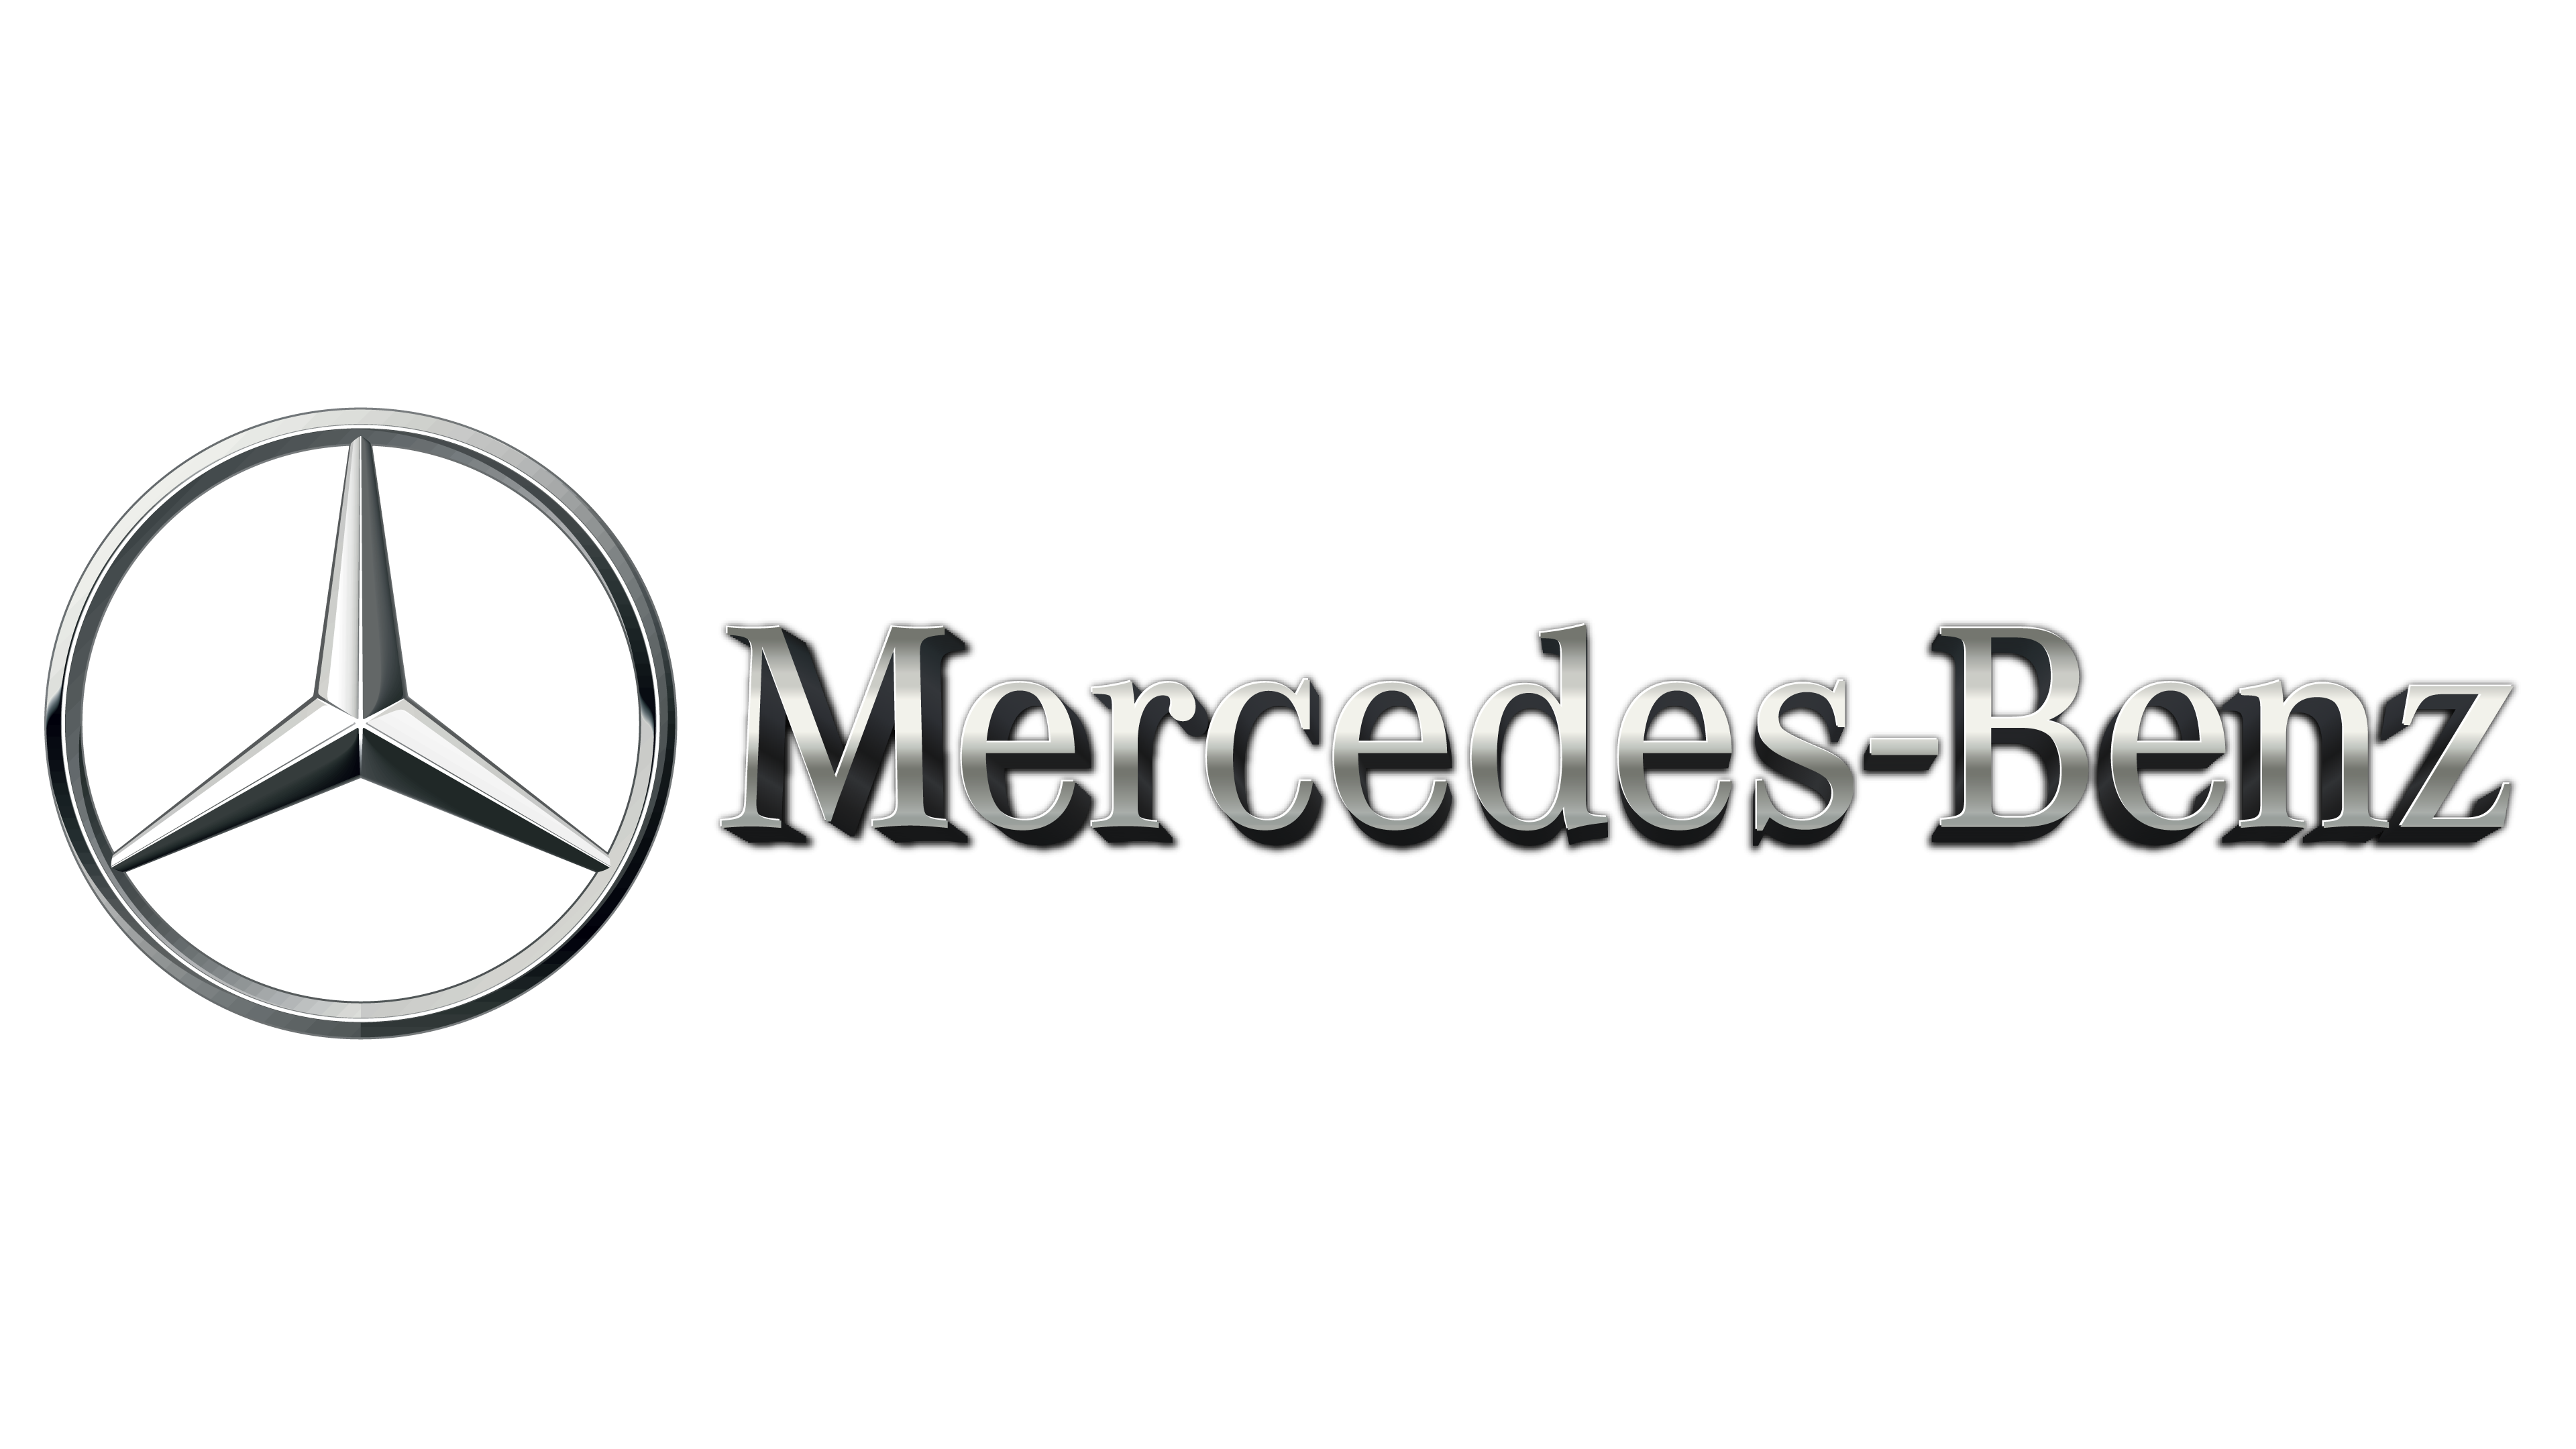 Mercedes текст. Mercedes Benz logo. Надпись Мерседес Бенц. Логотип Мерседес на прозрачном фоне. Логотип Мерседес с надписью.